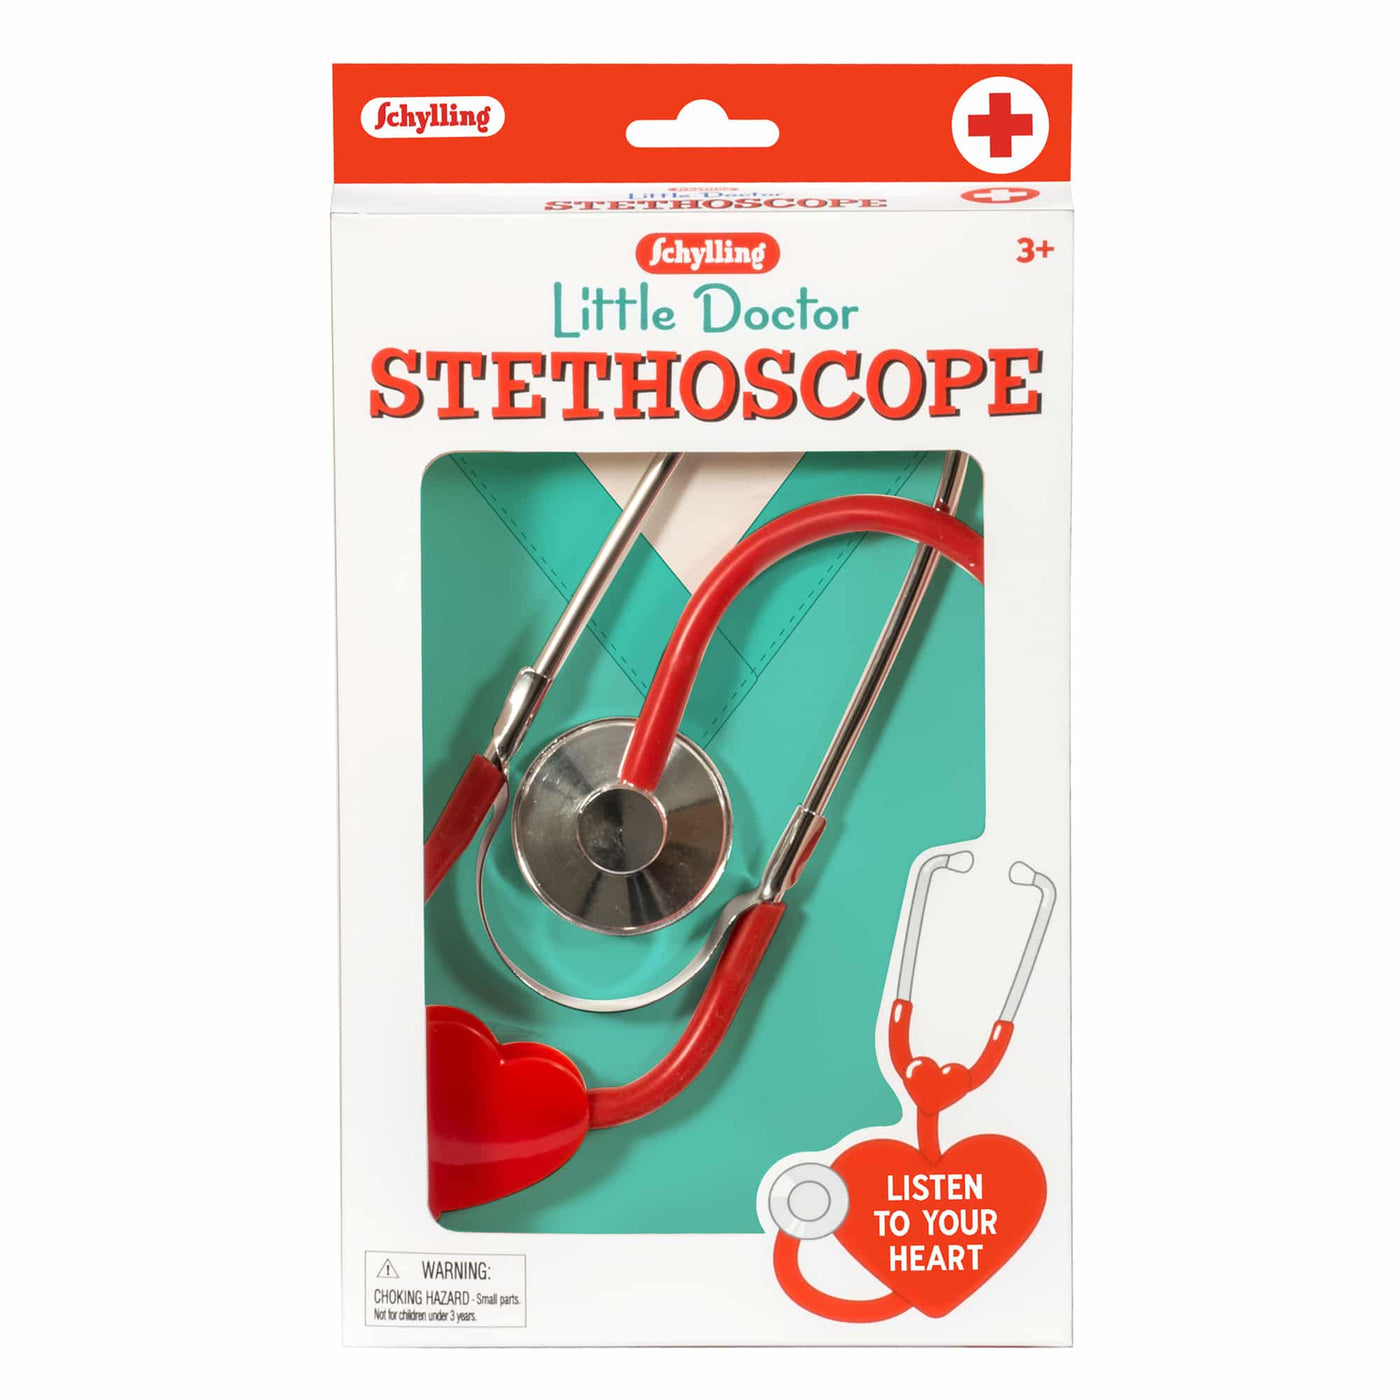 Little Doctor Stethoschope